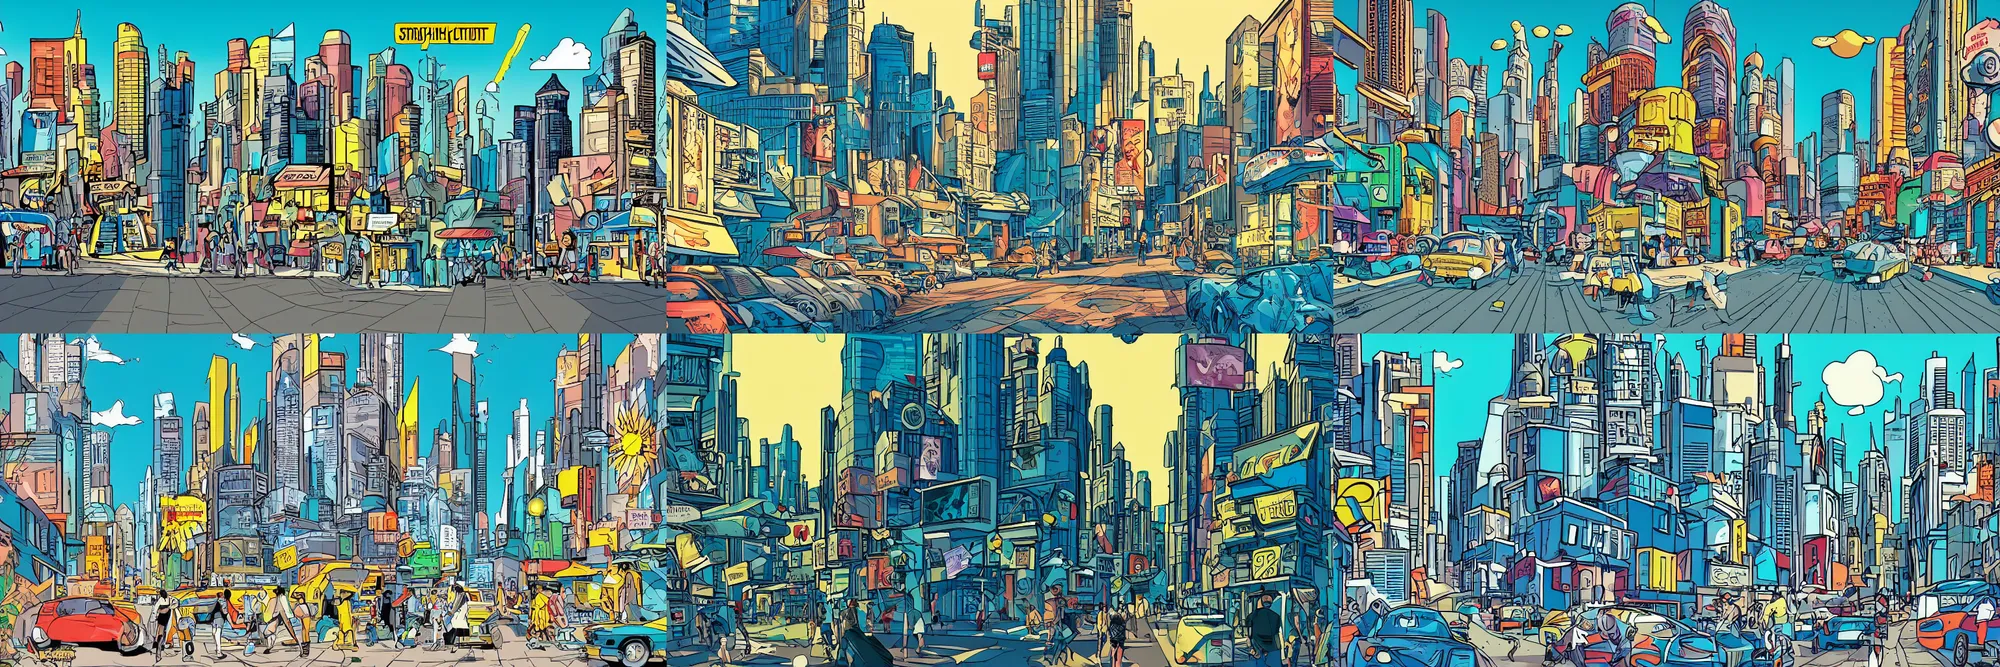 Prompt: comic book background of a bright sunny futuristic city street